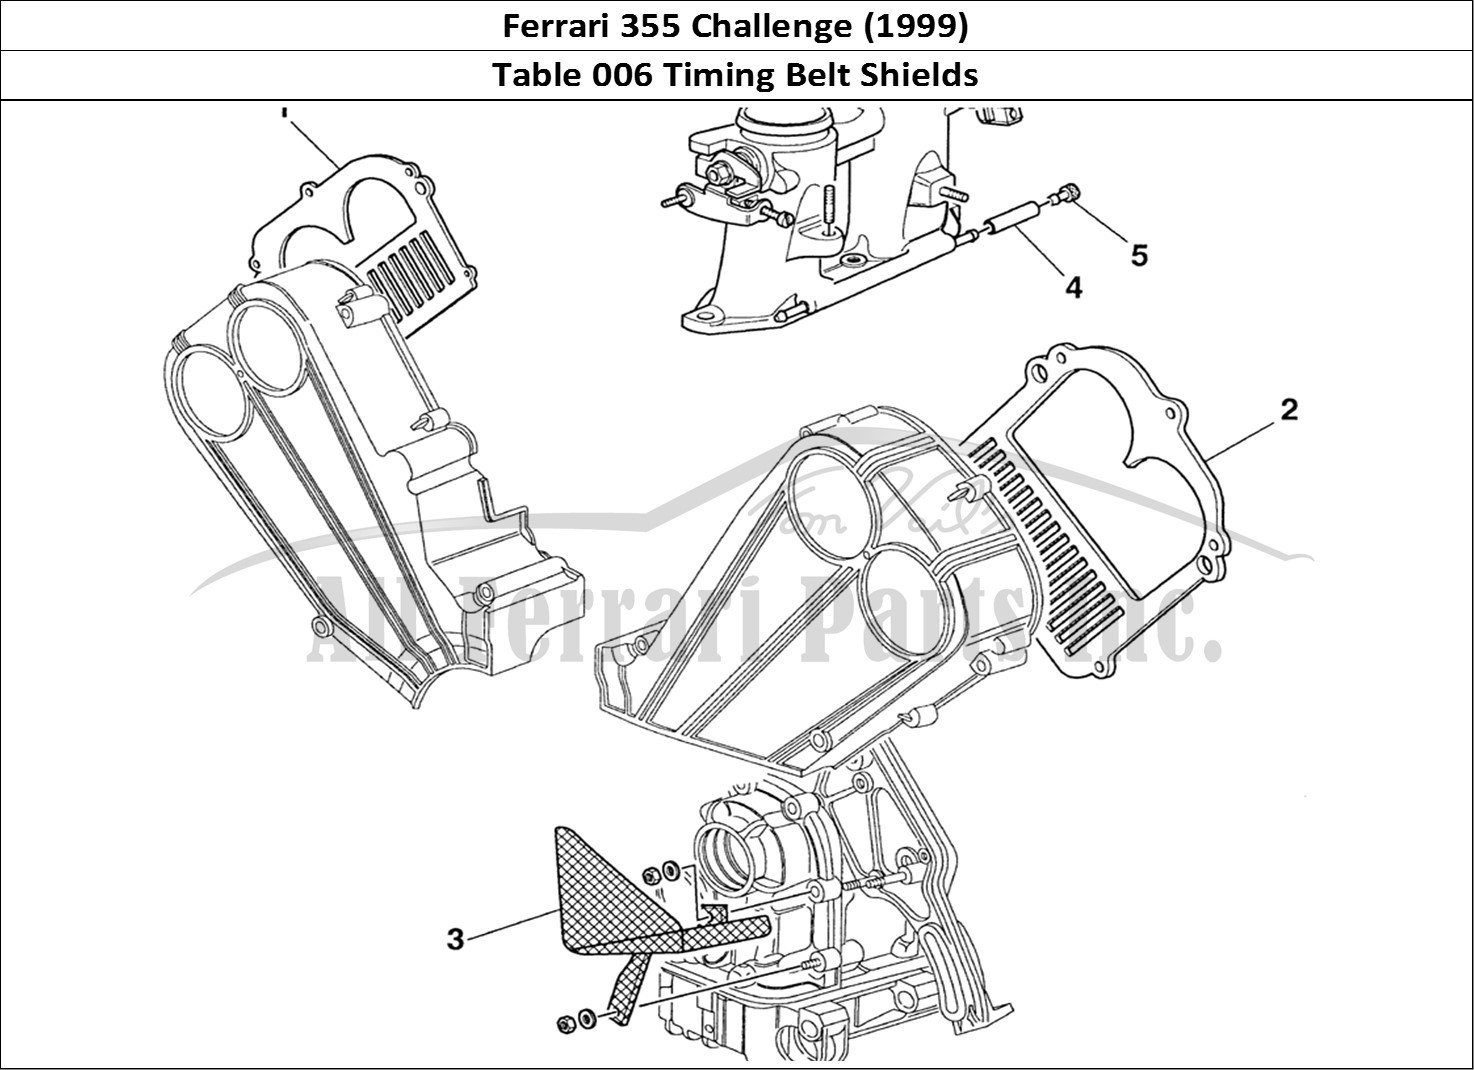 Ferrari Parts Ferrari 355 Challenge (1999) Page 006 Belt Protections